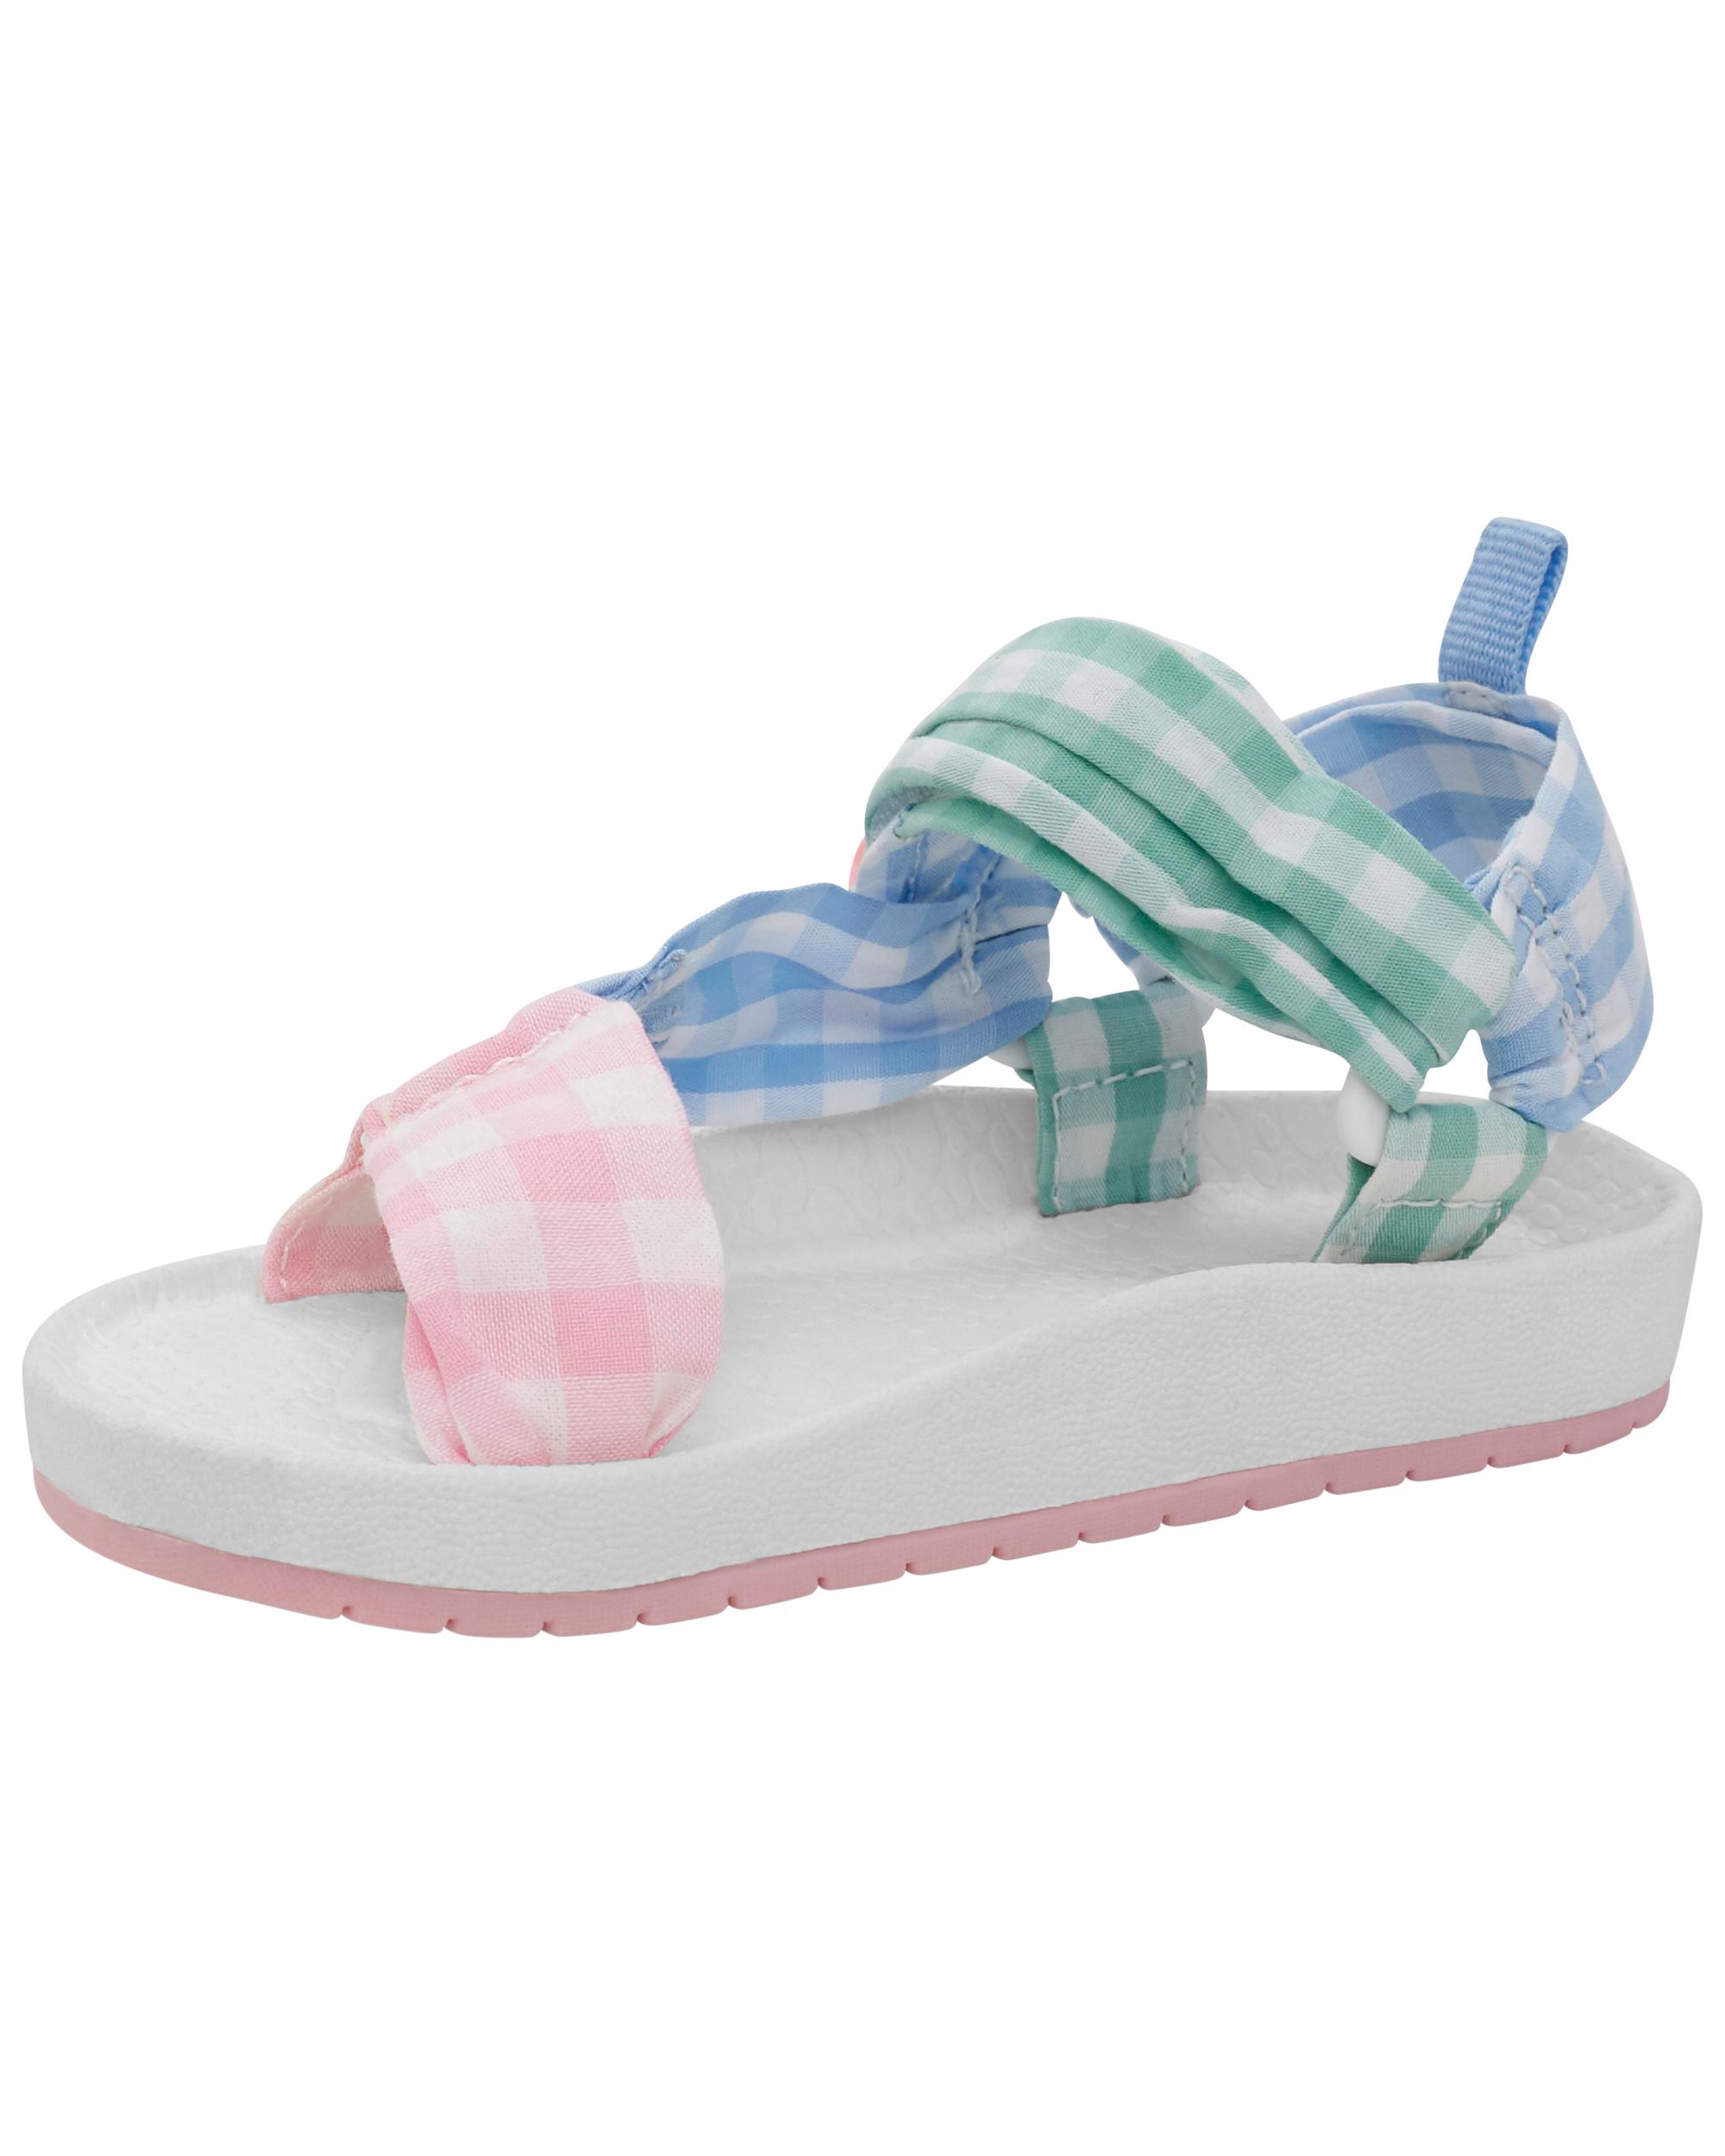 Toddler Plaid Sandals